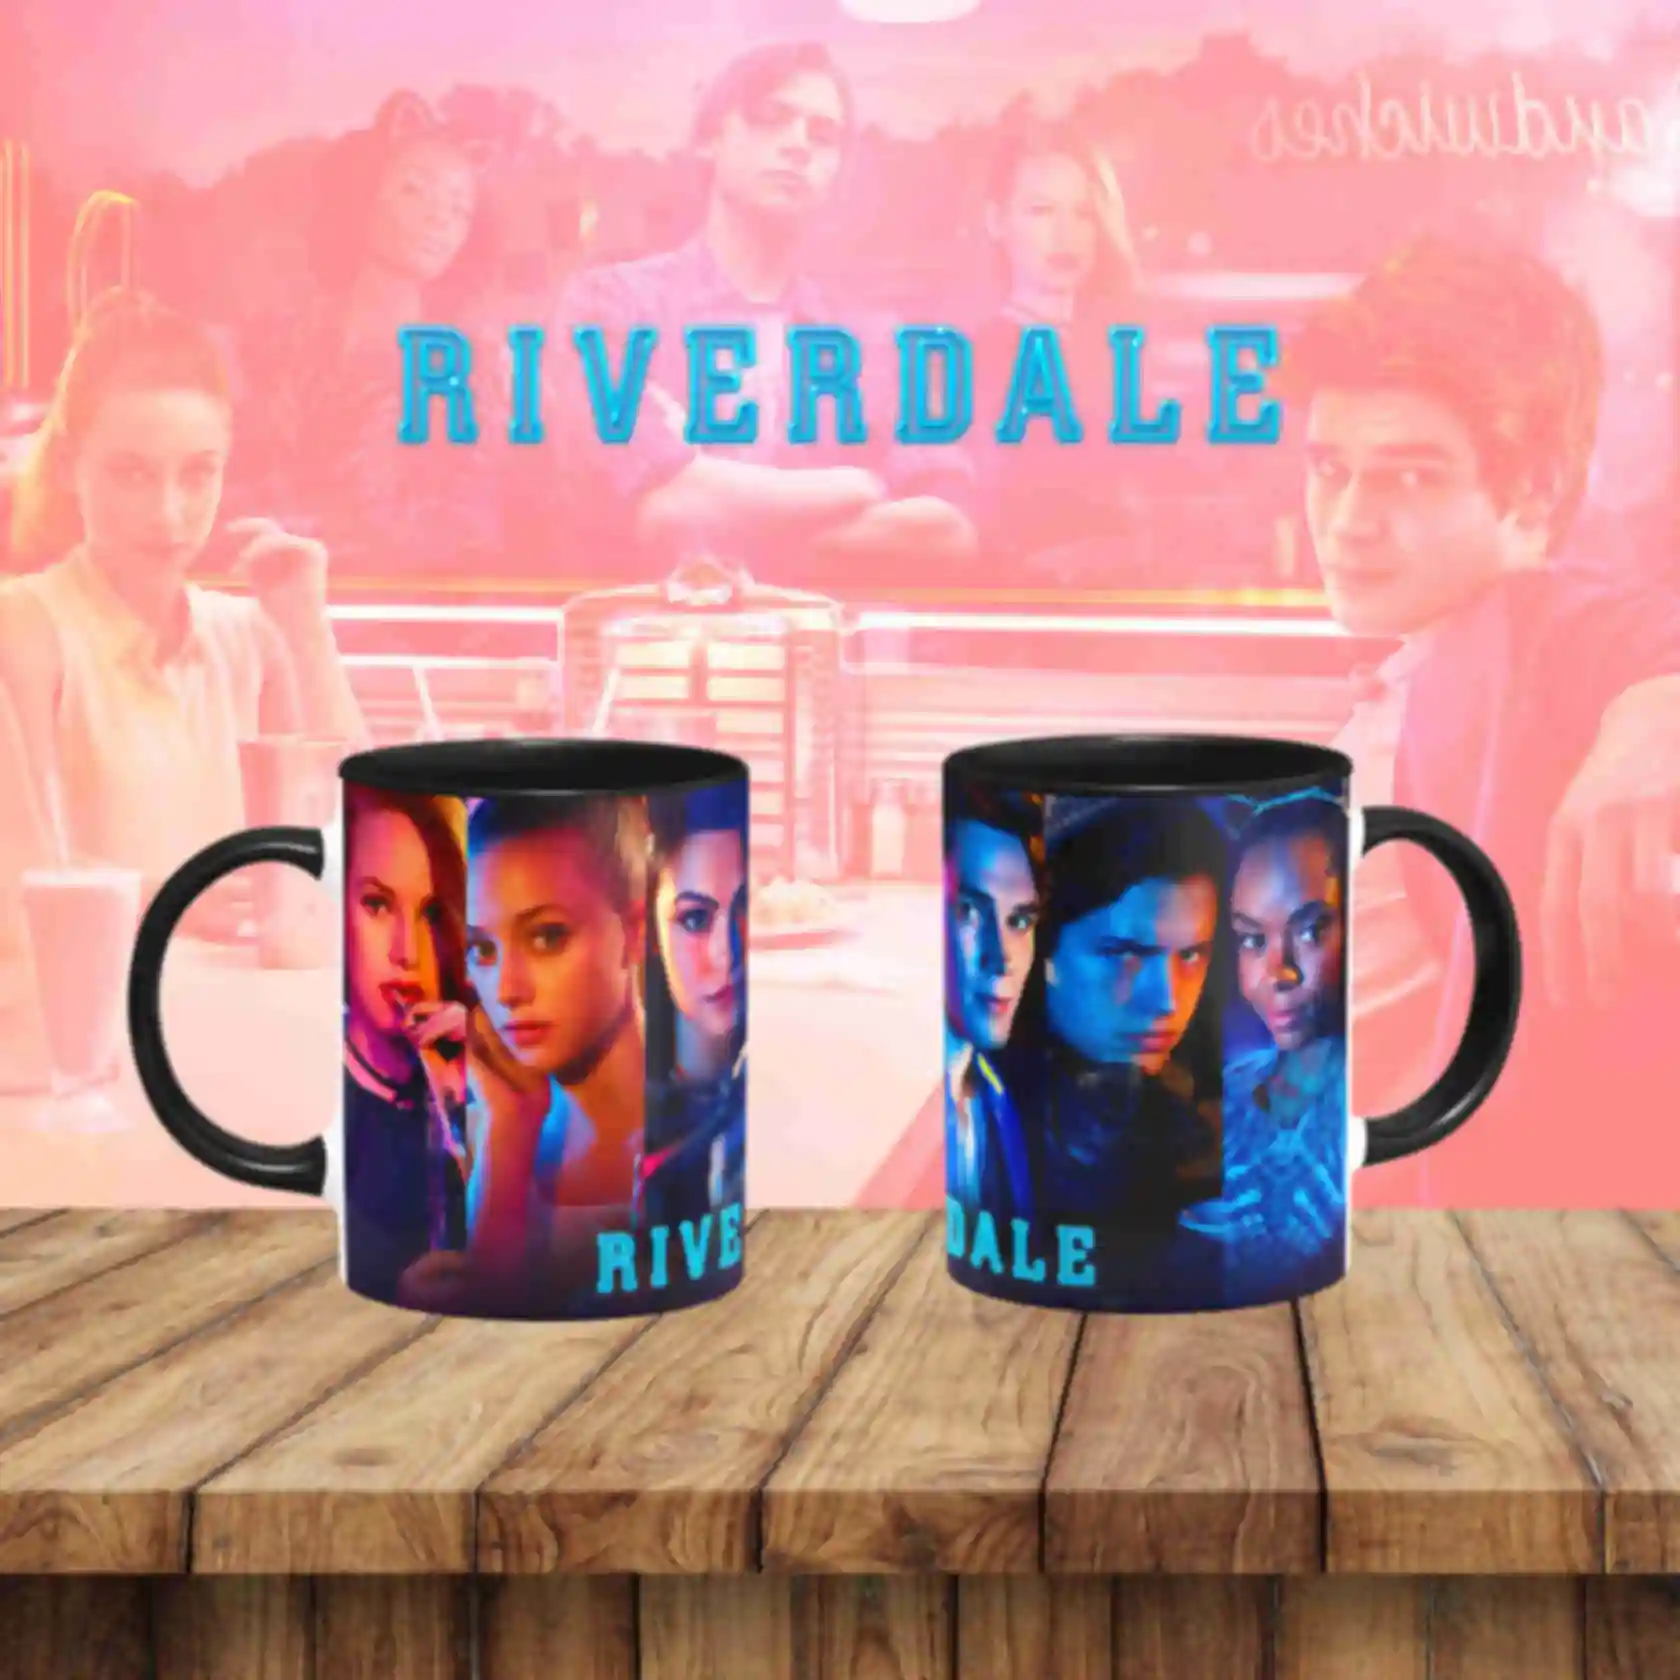 Чашка • Ривердейл • Кружка с героями • Сувениры • Подарки в стиле сериала Riverdale